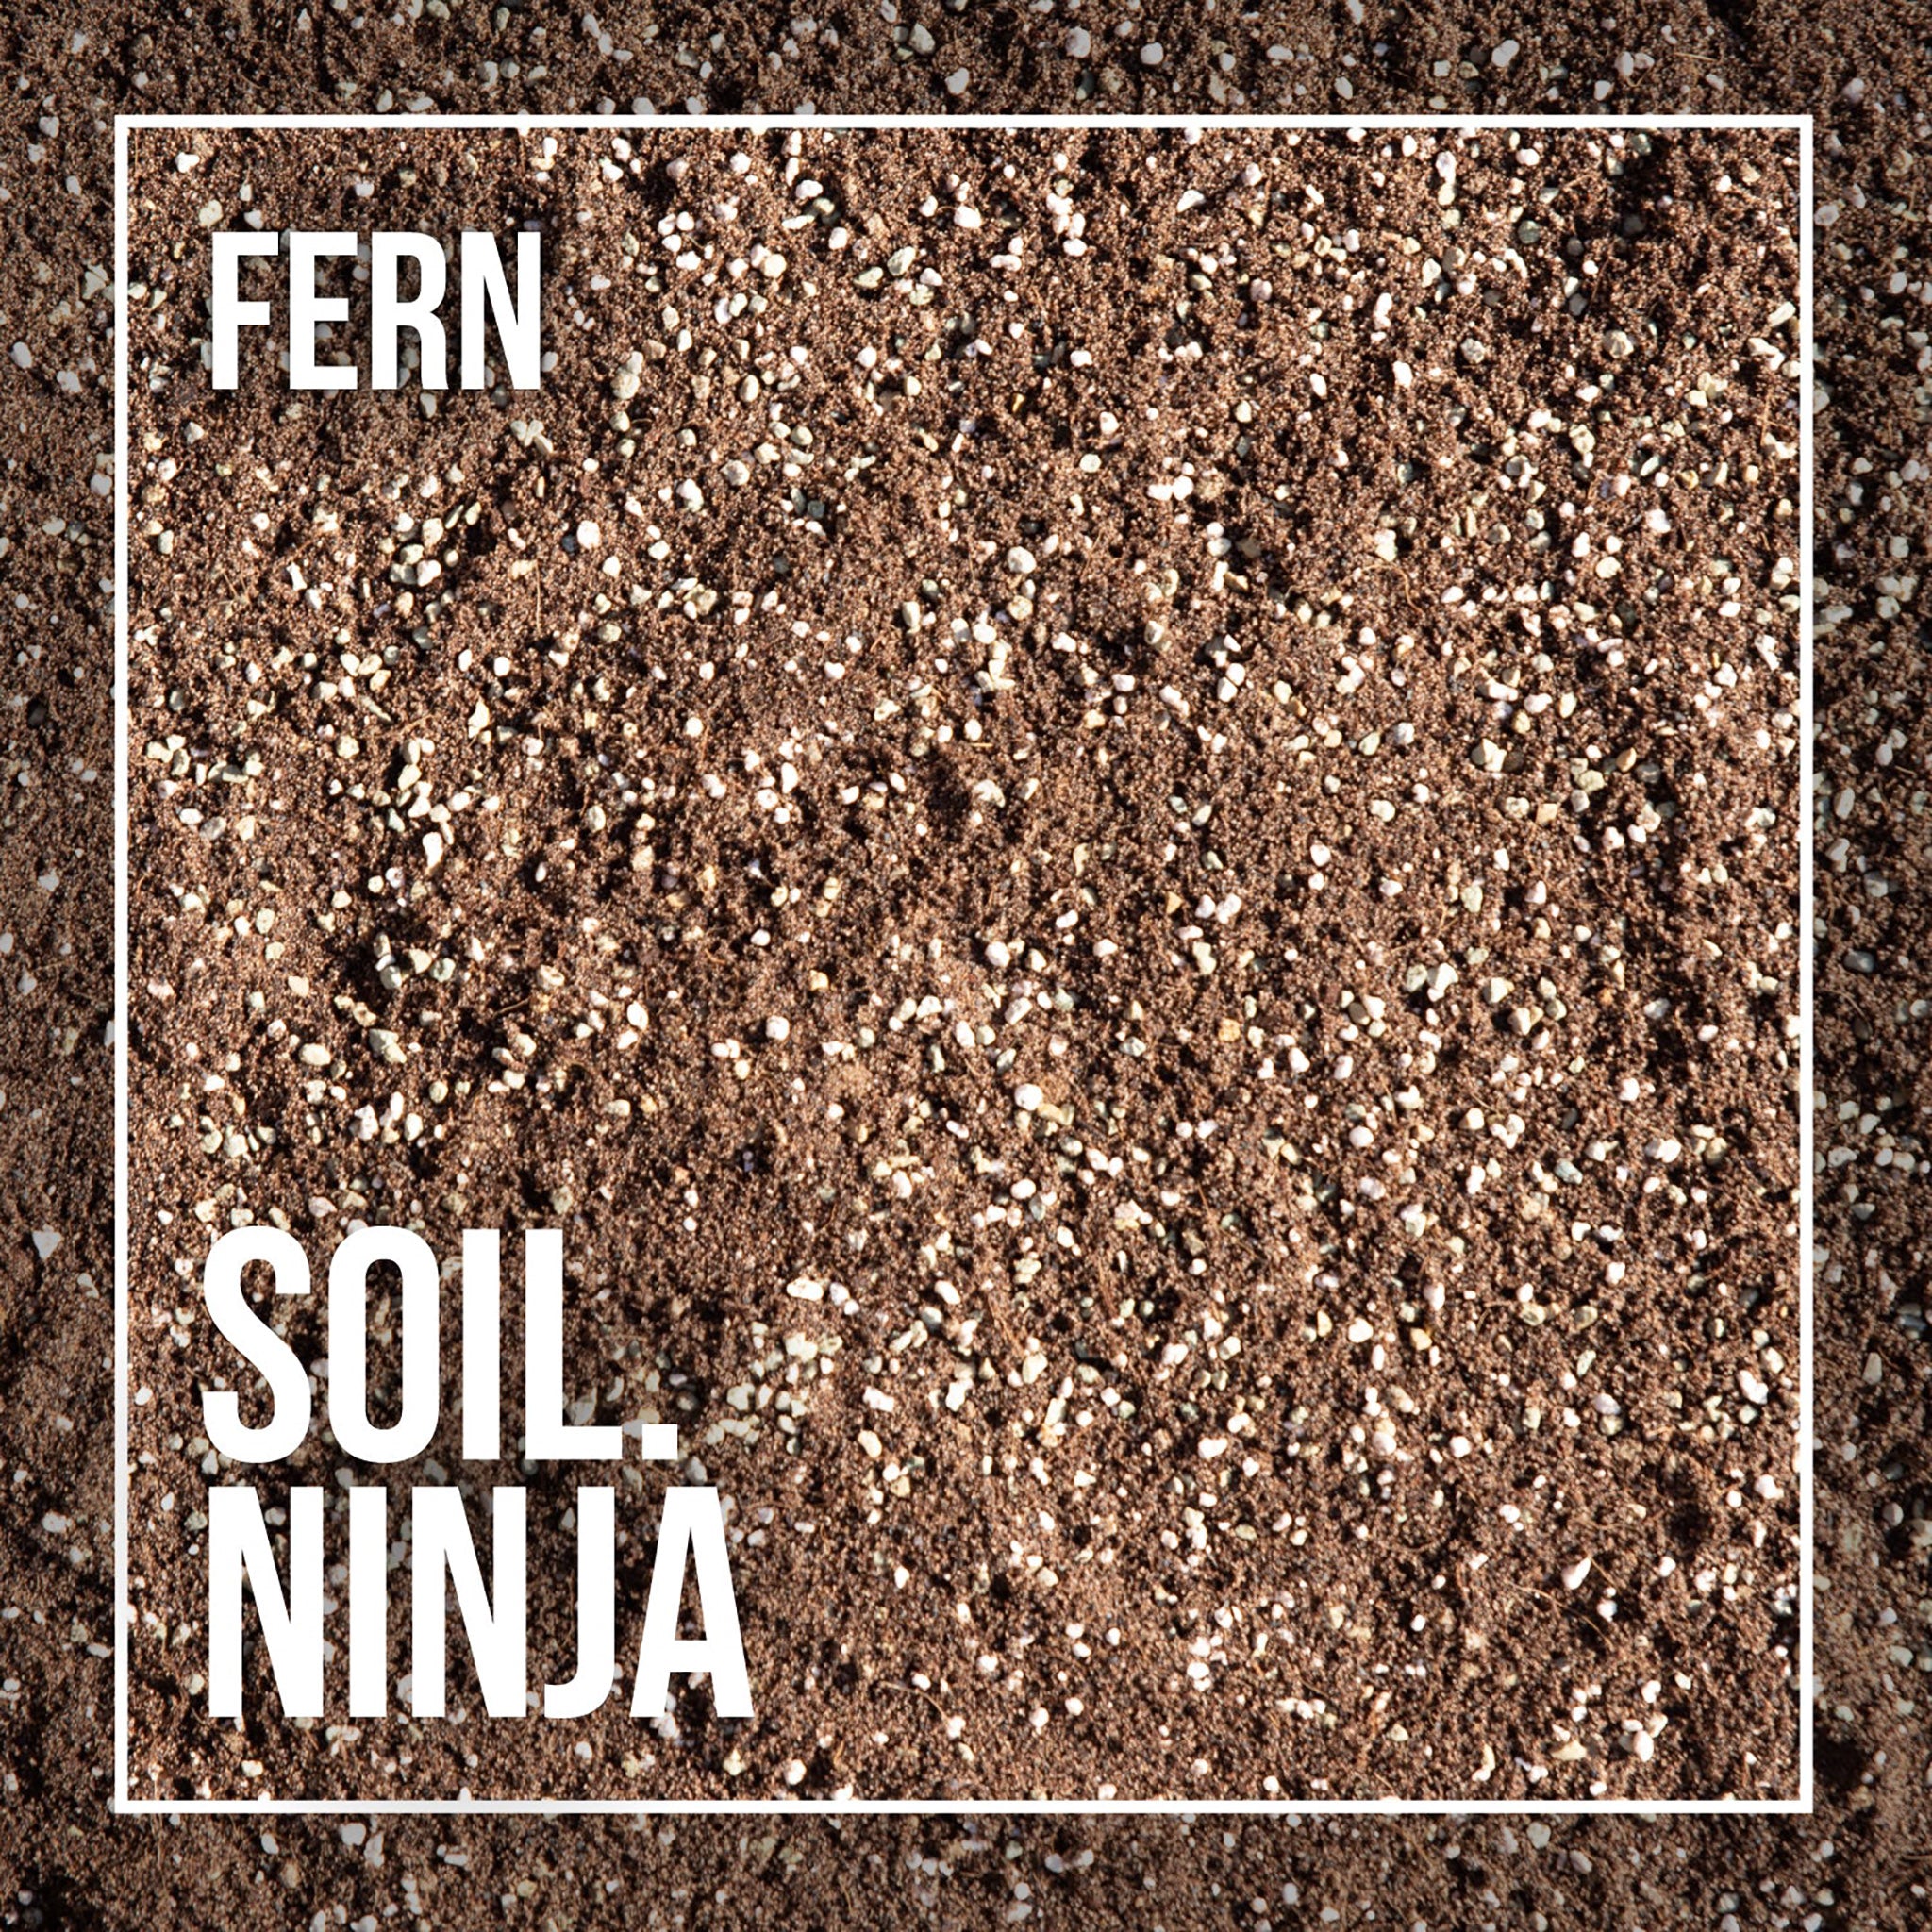 soil-ninja-5l-fern-blend-soil